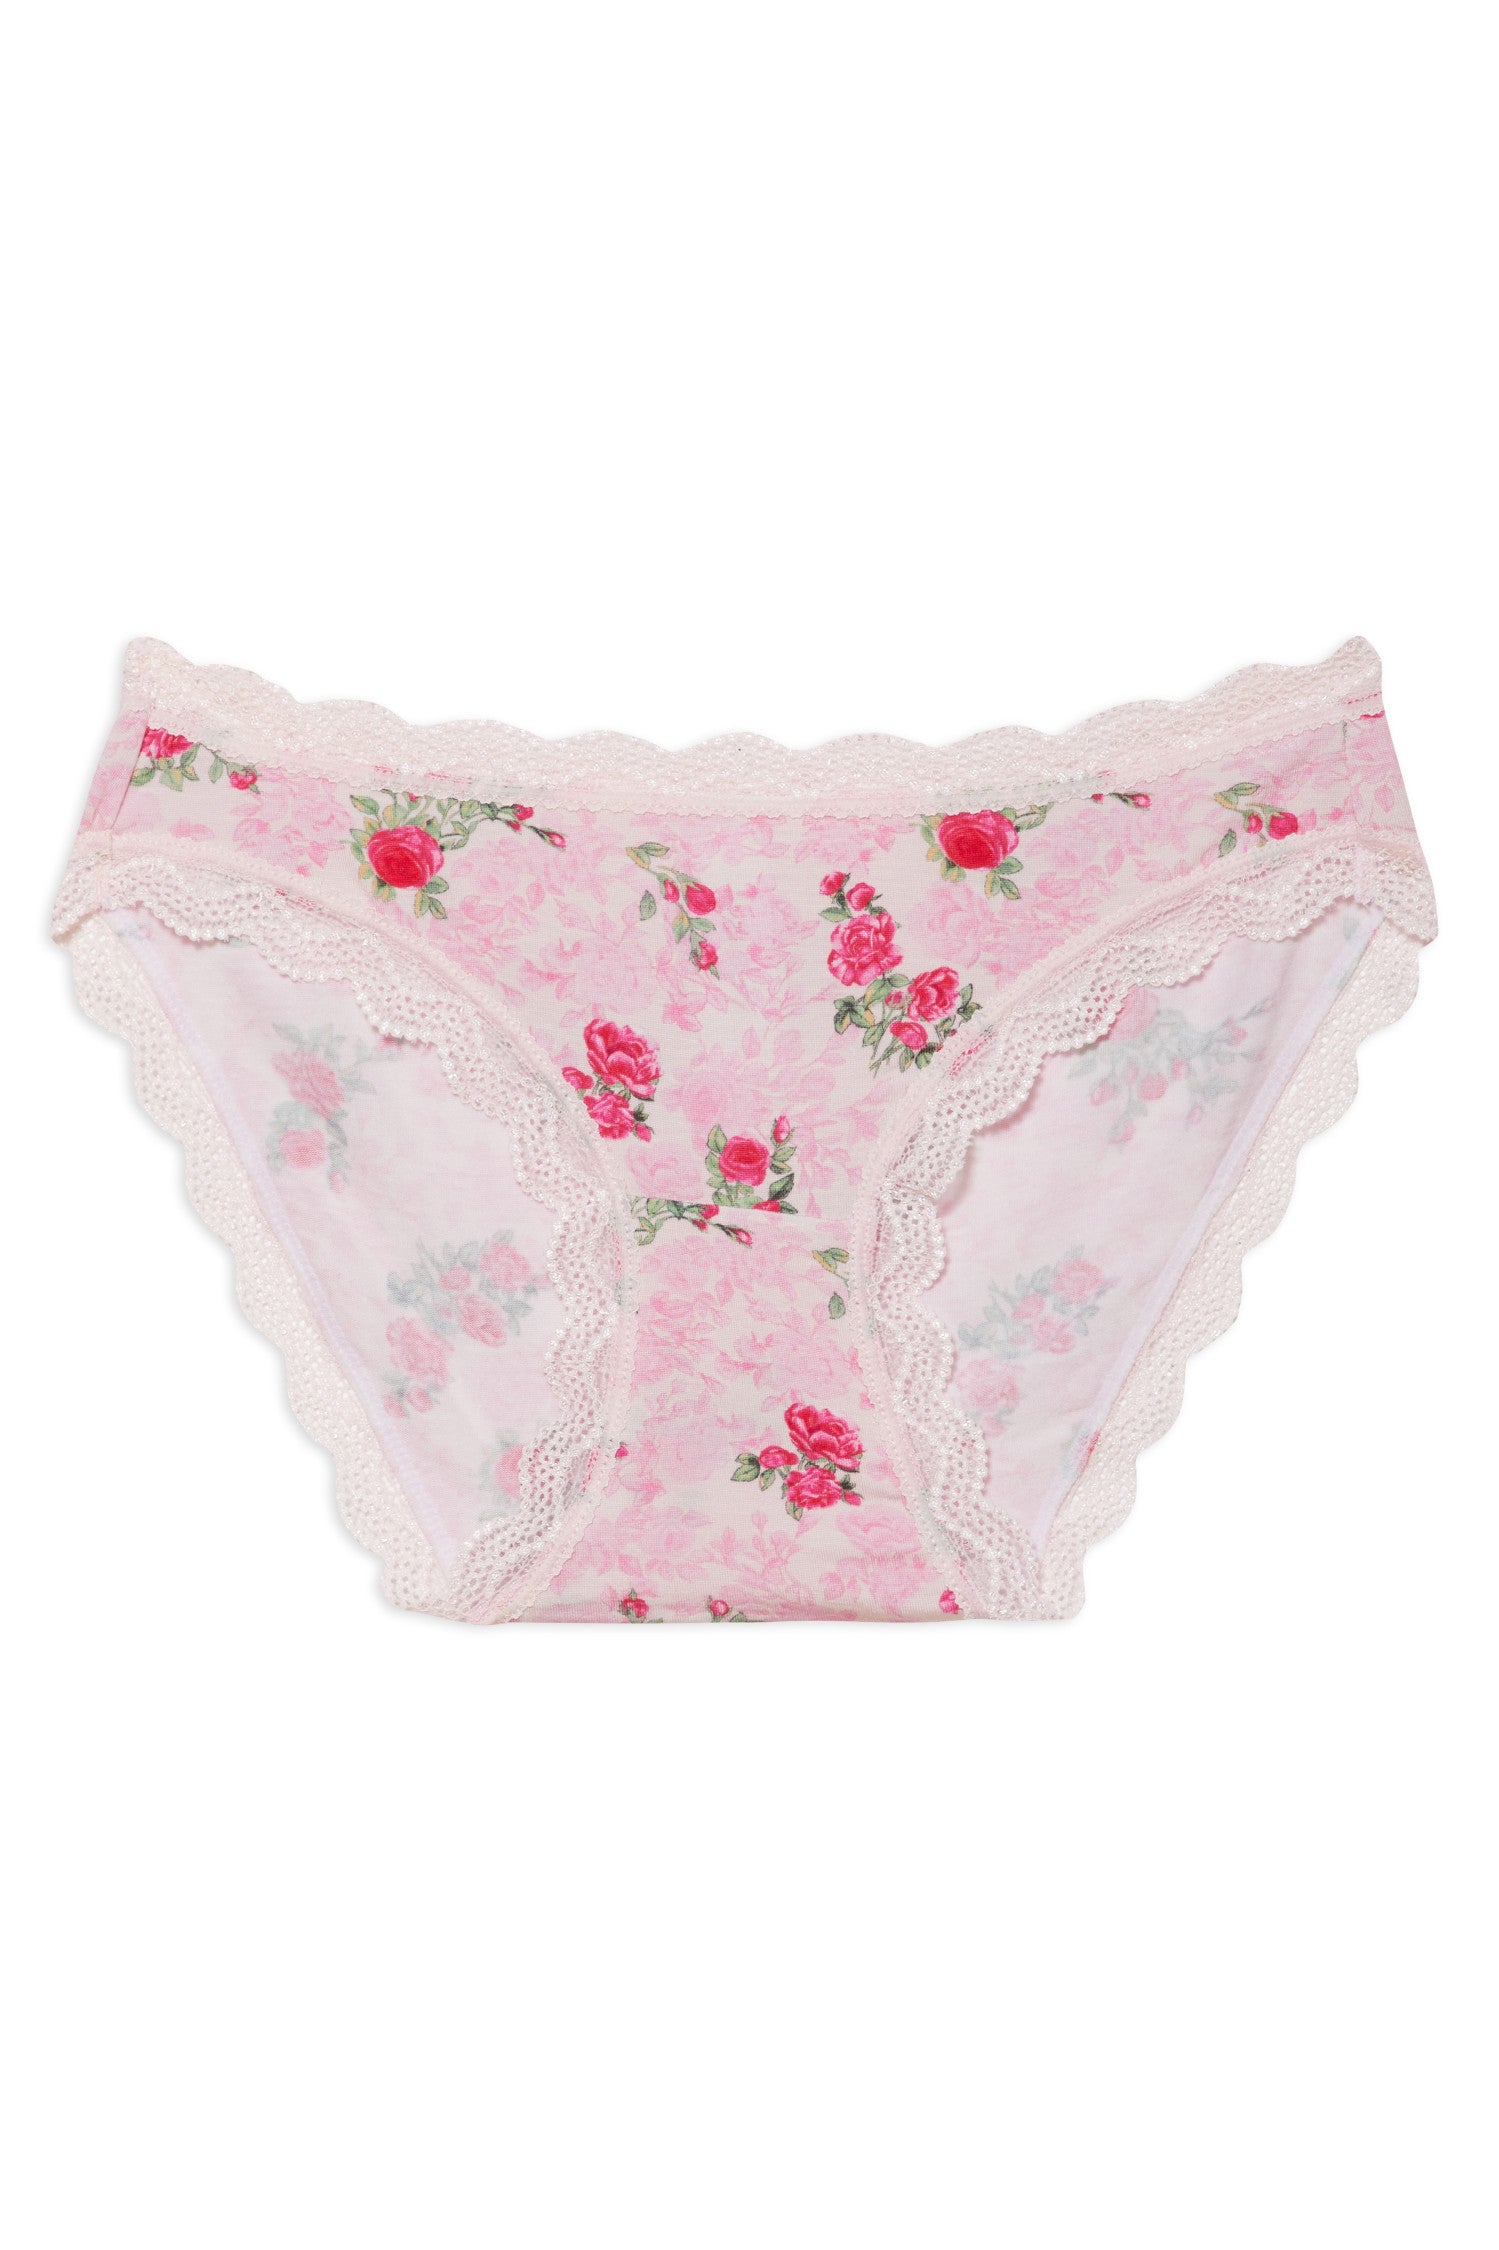 Faye pink lace knickers  Handcrafted, luxury underwear sets